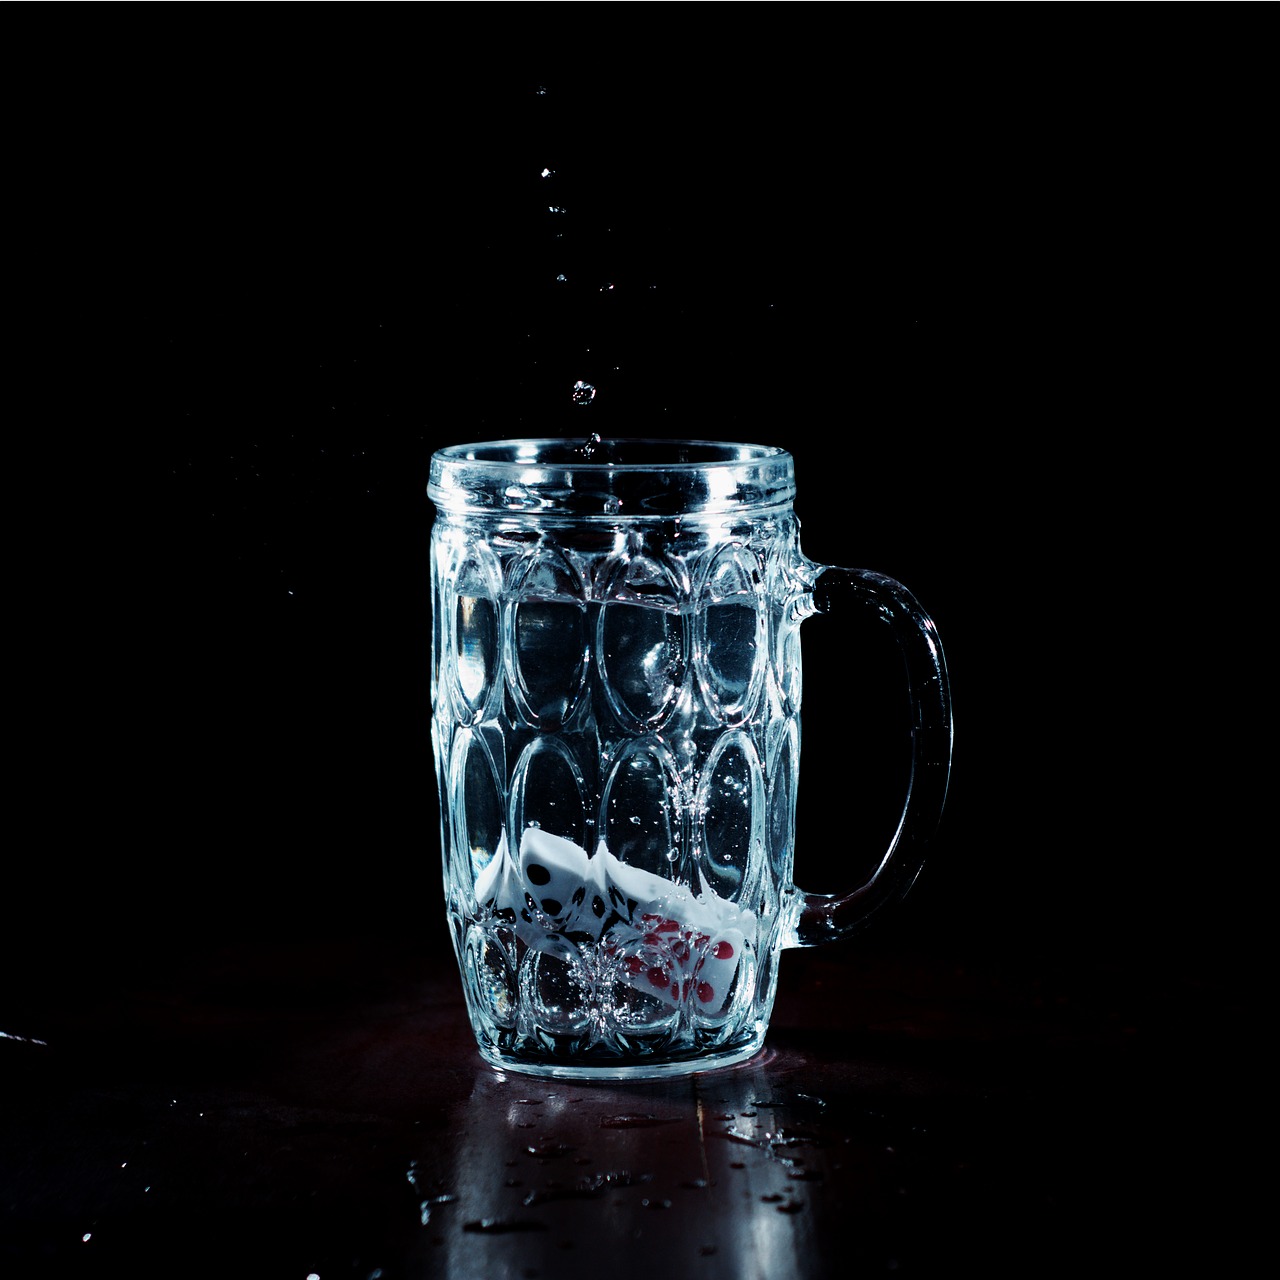 Image - glass water liquid background